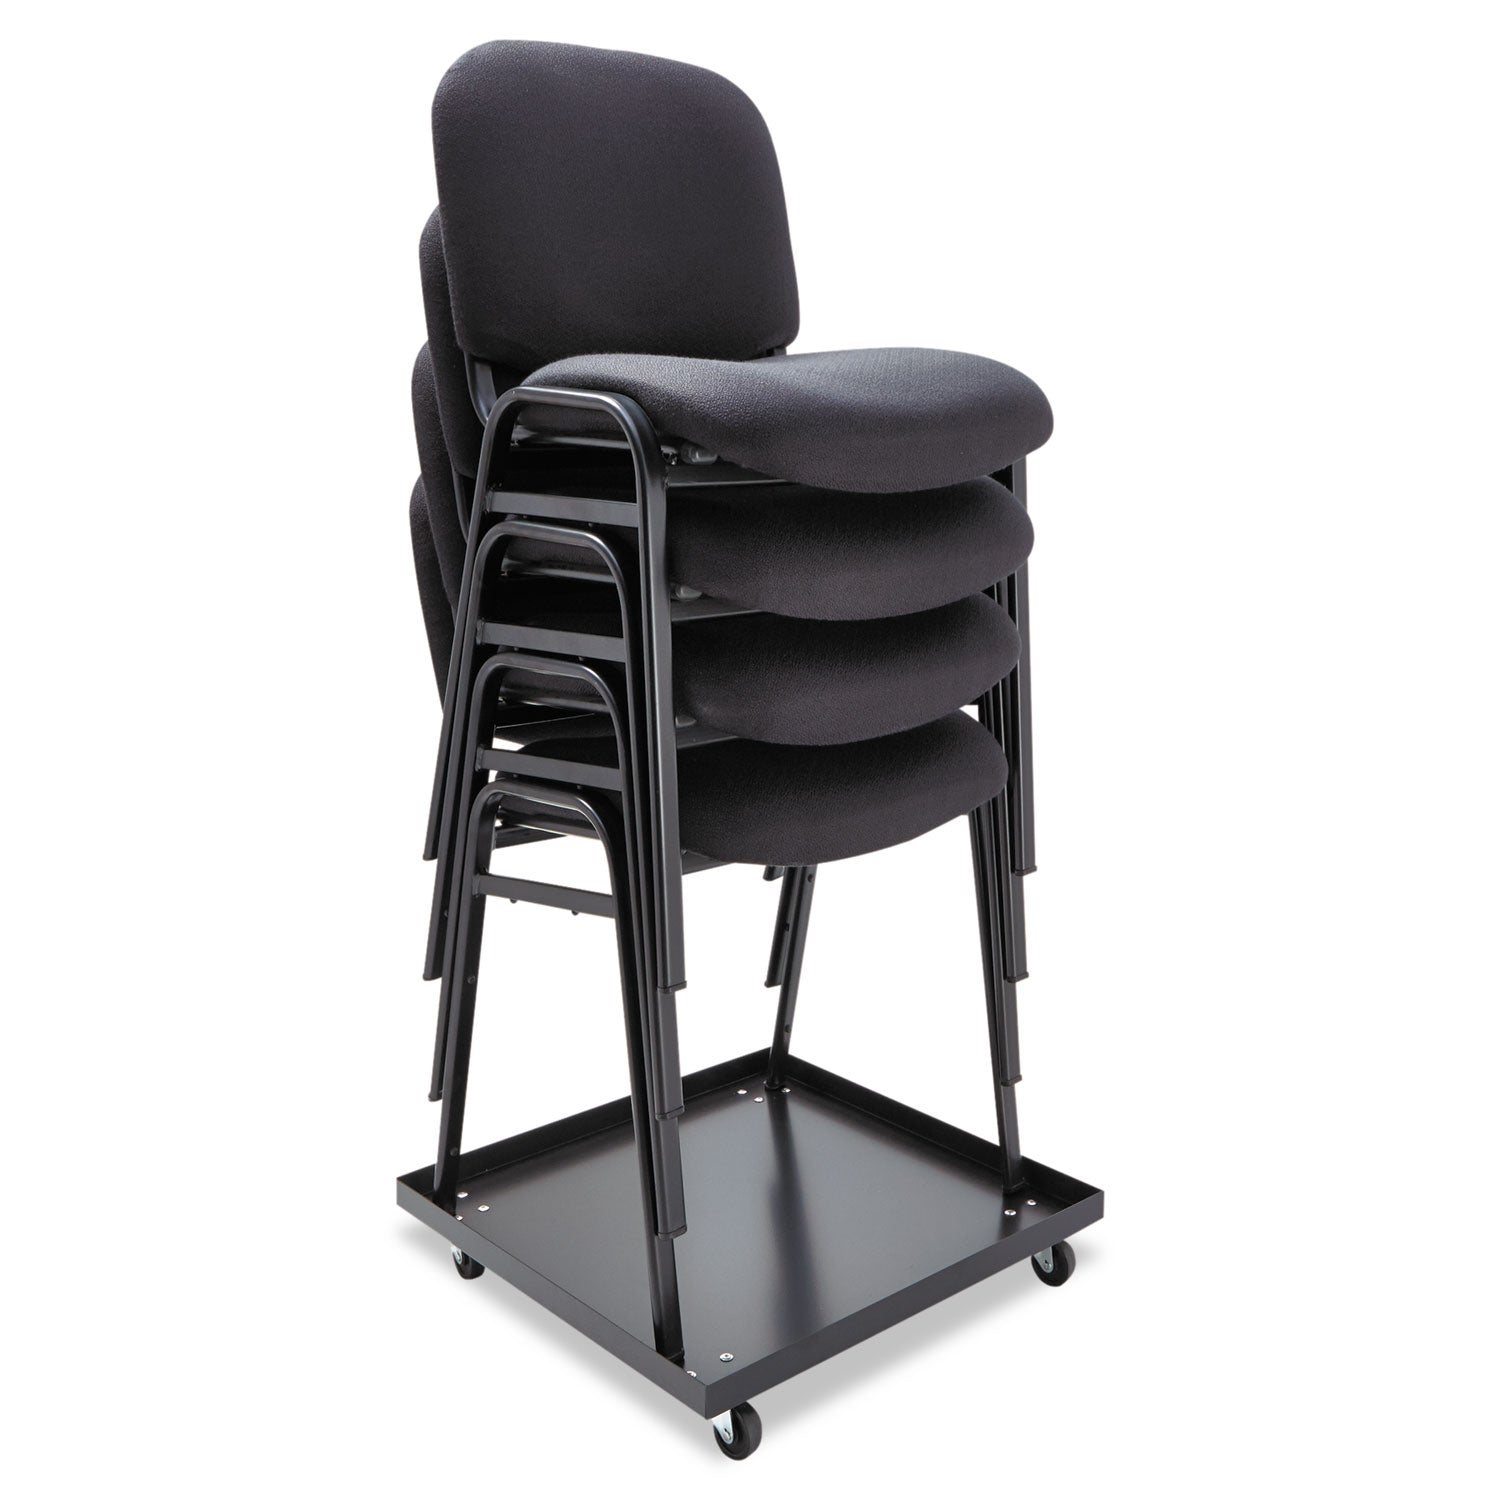 Stacking Chair Dolly, Metal, 320 lb Capacity, 22.44" x 22.44" x 3.93", Black - 